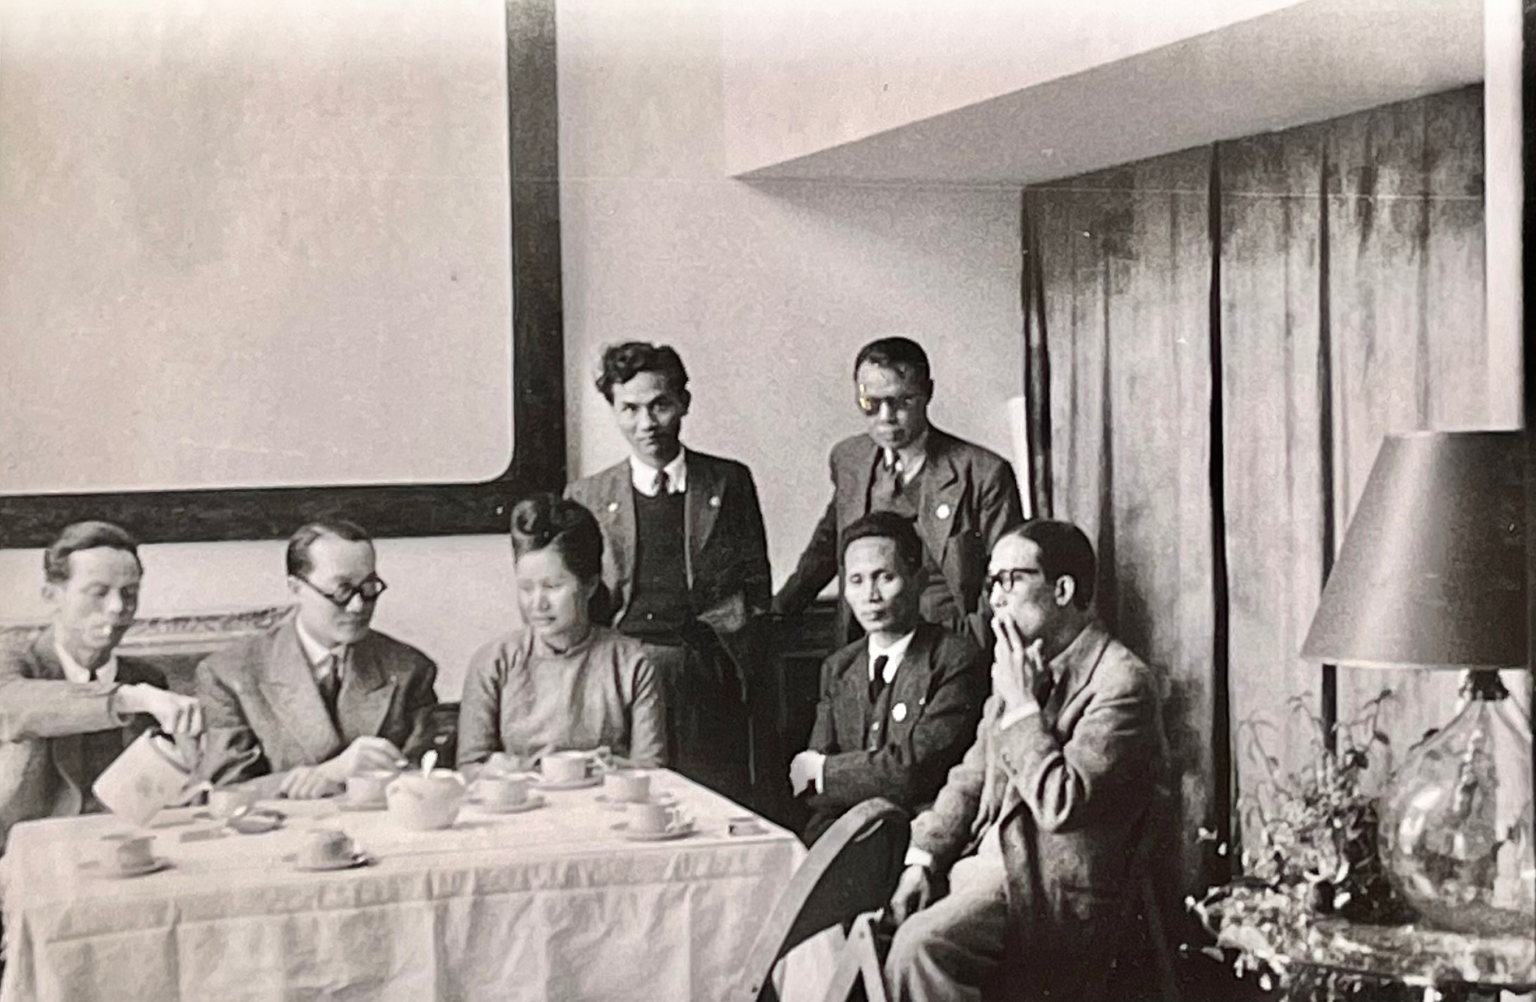 Vu Cao Dam, friend of artist, Le Thi Luu, friend of artist, Pham
Van Dong (seated), Le Pho (standing), Mai Trung Thu (left to right) Paris 1946